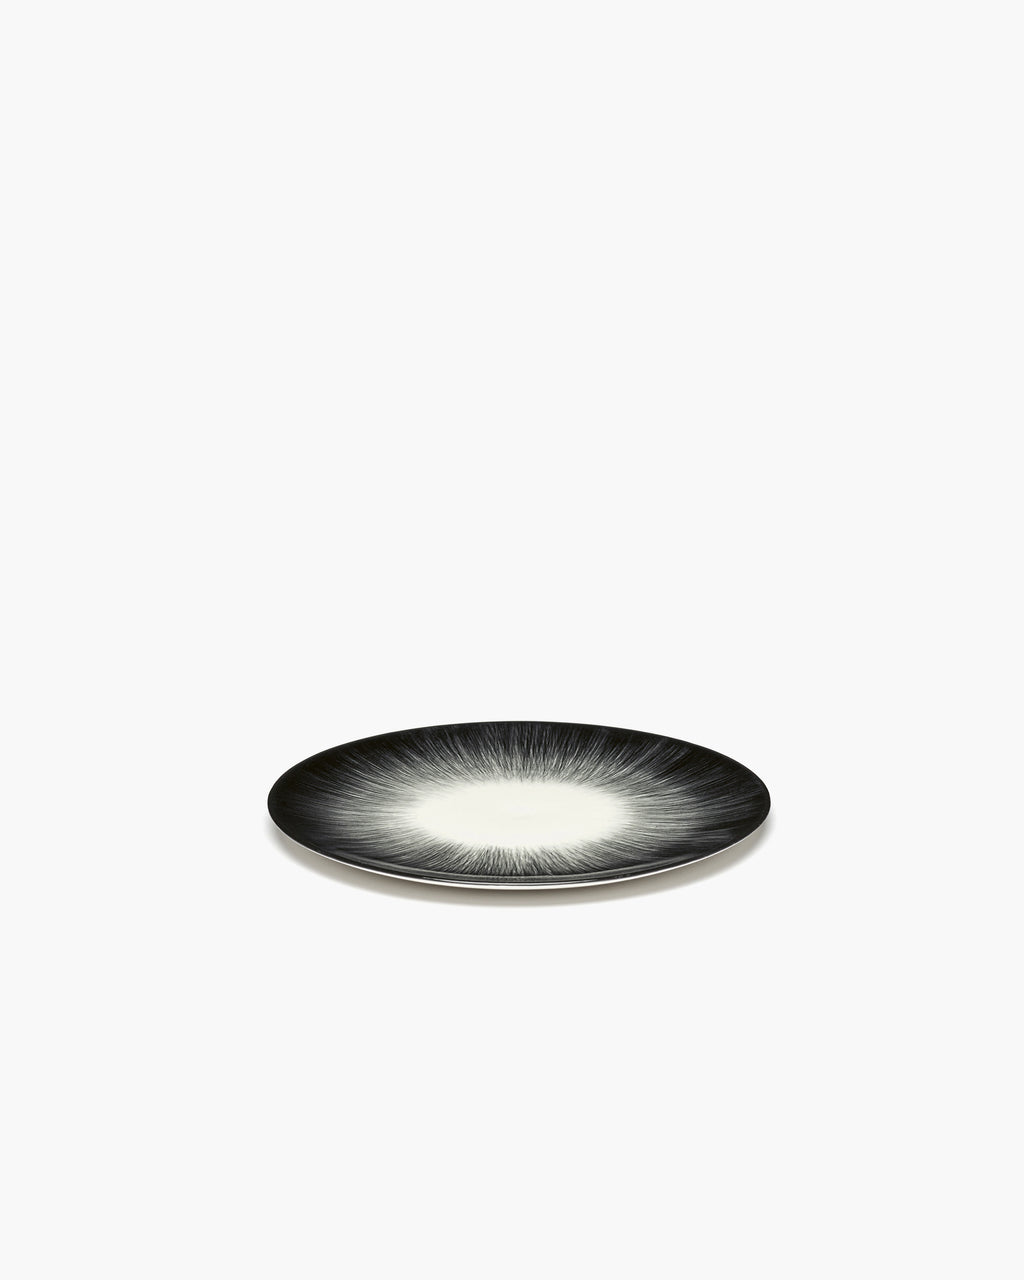 Breakfast Plate White/Black Variation 5 De Collection